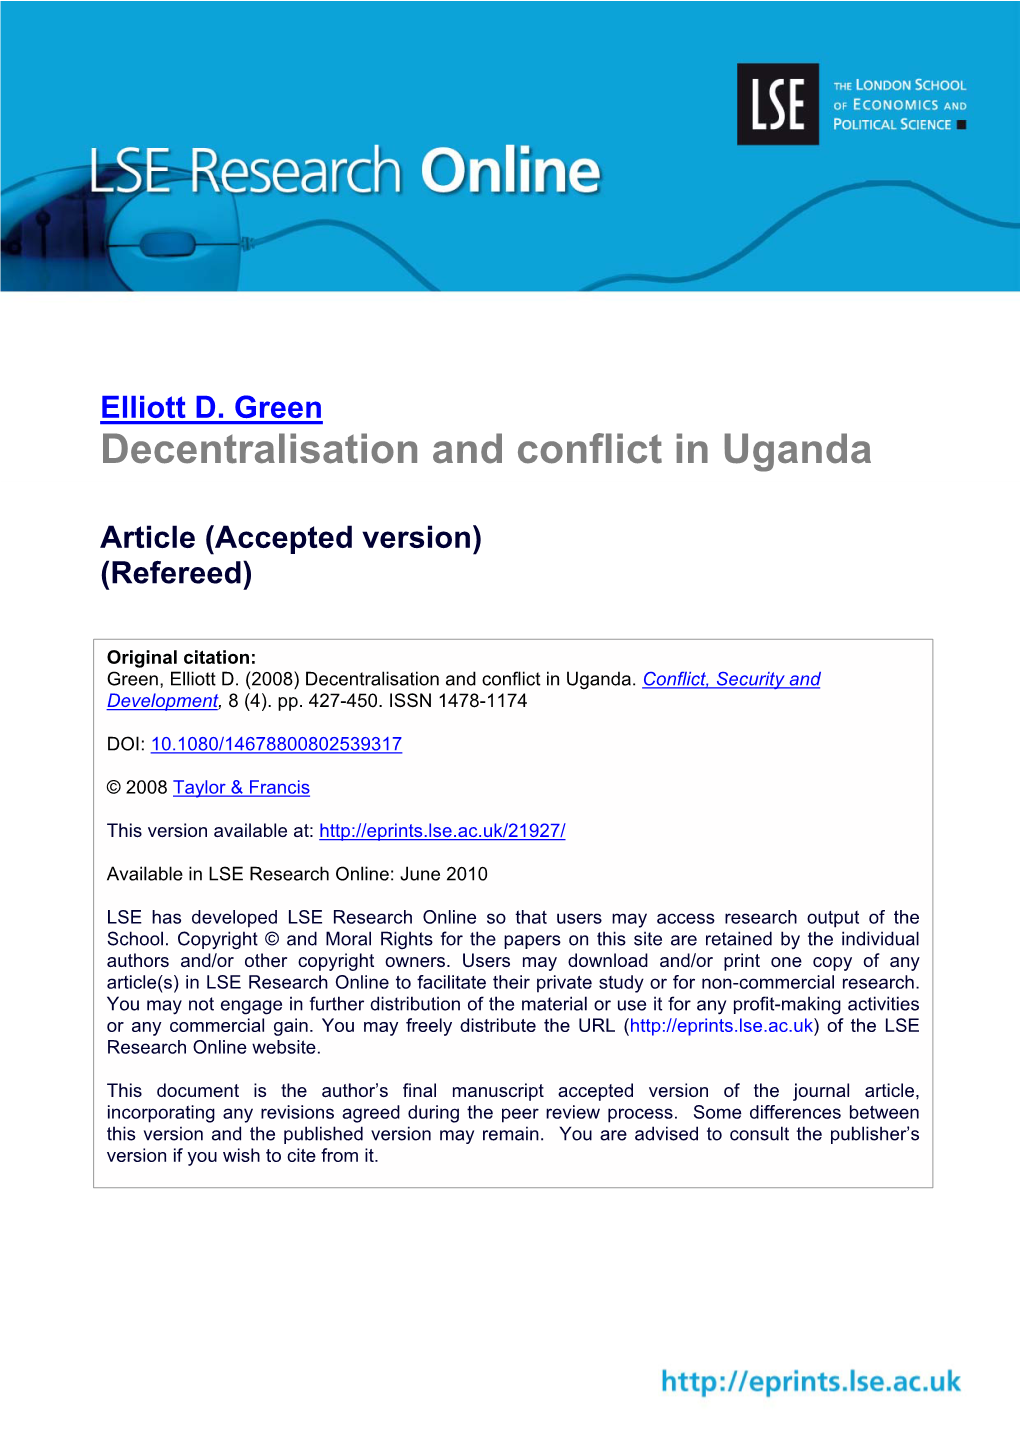 Decentralisation and Conflict in Uganda